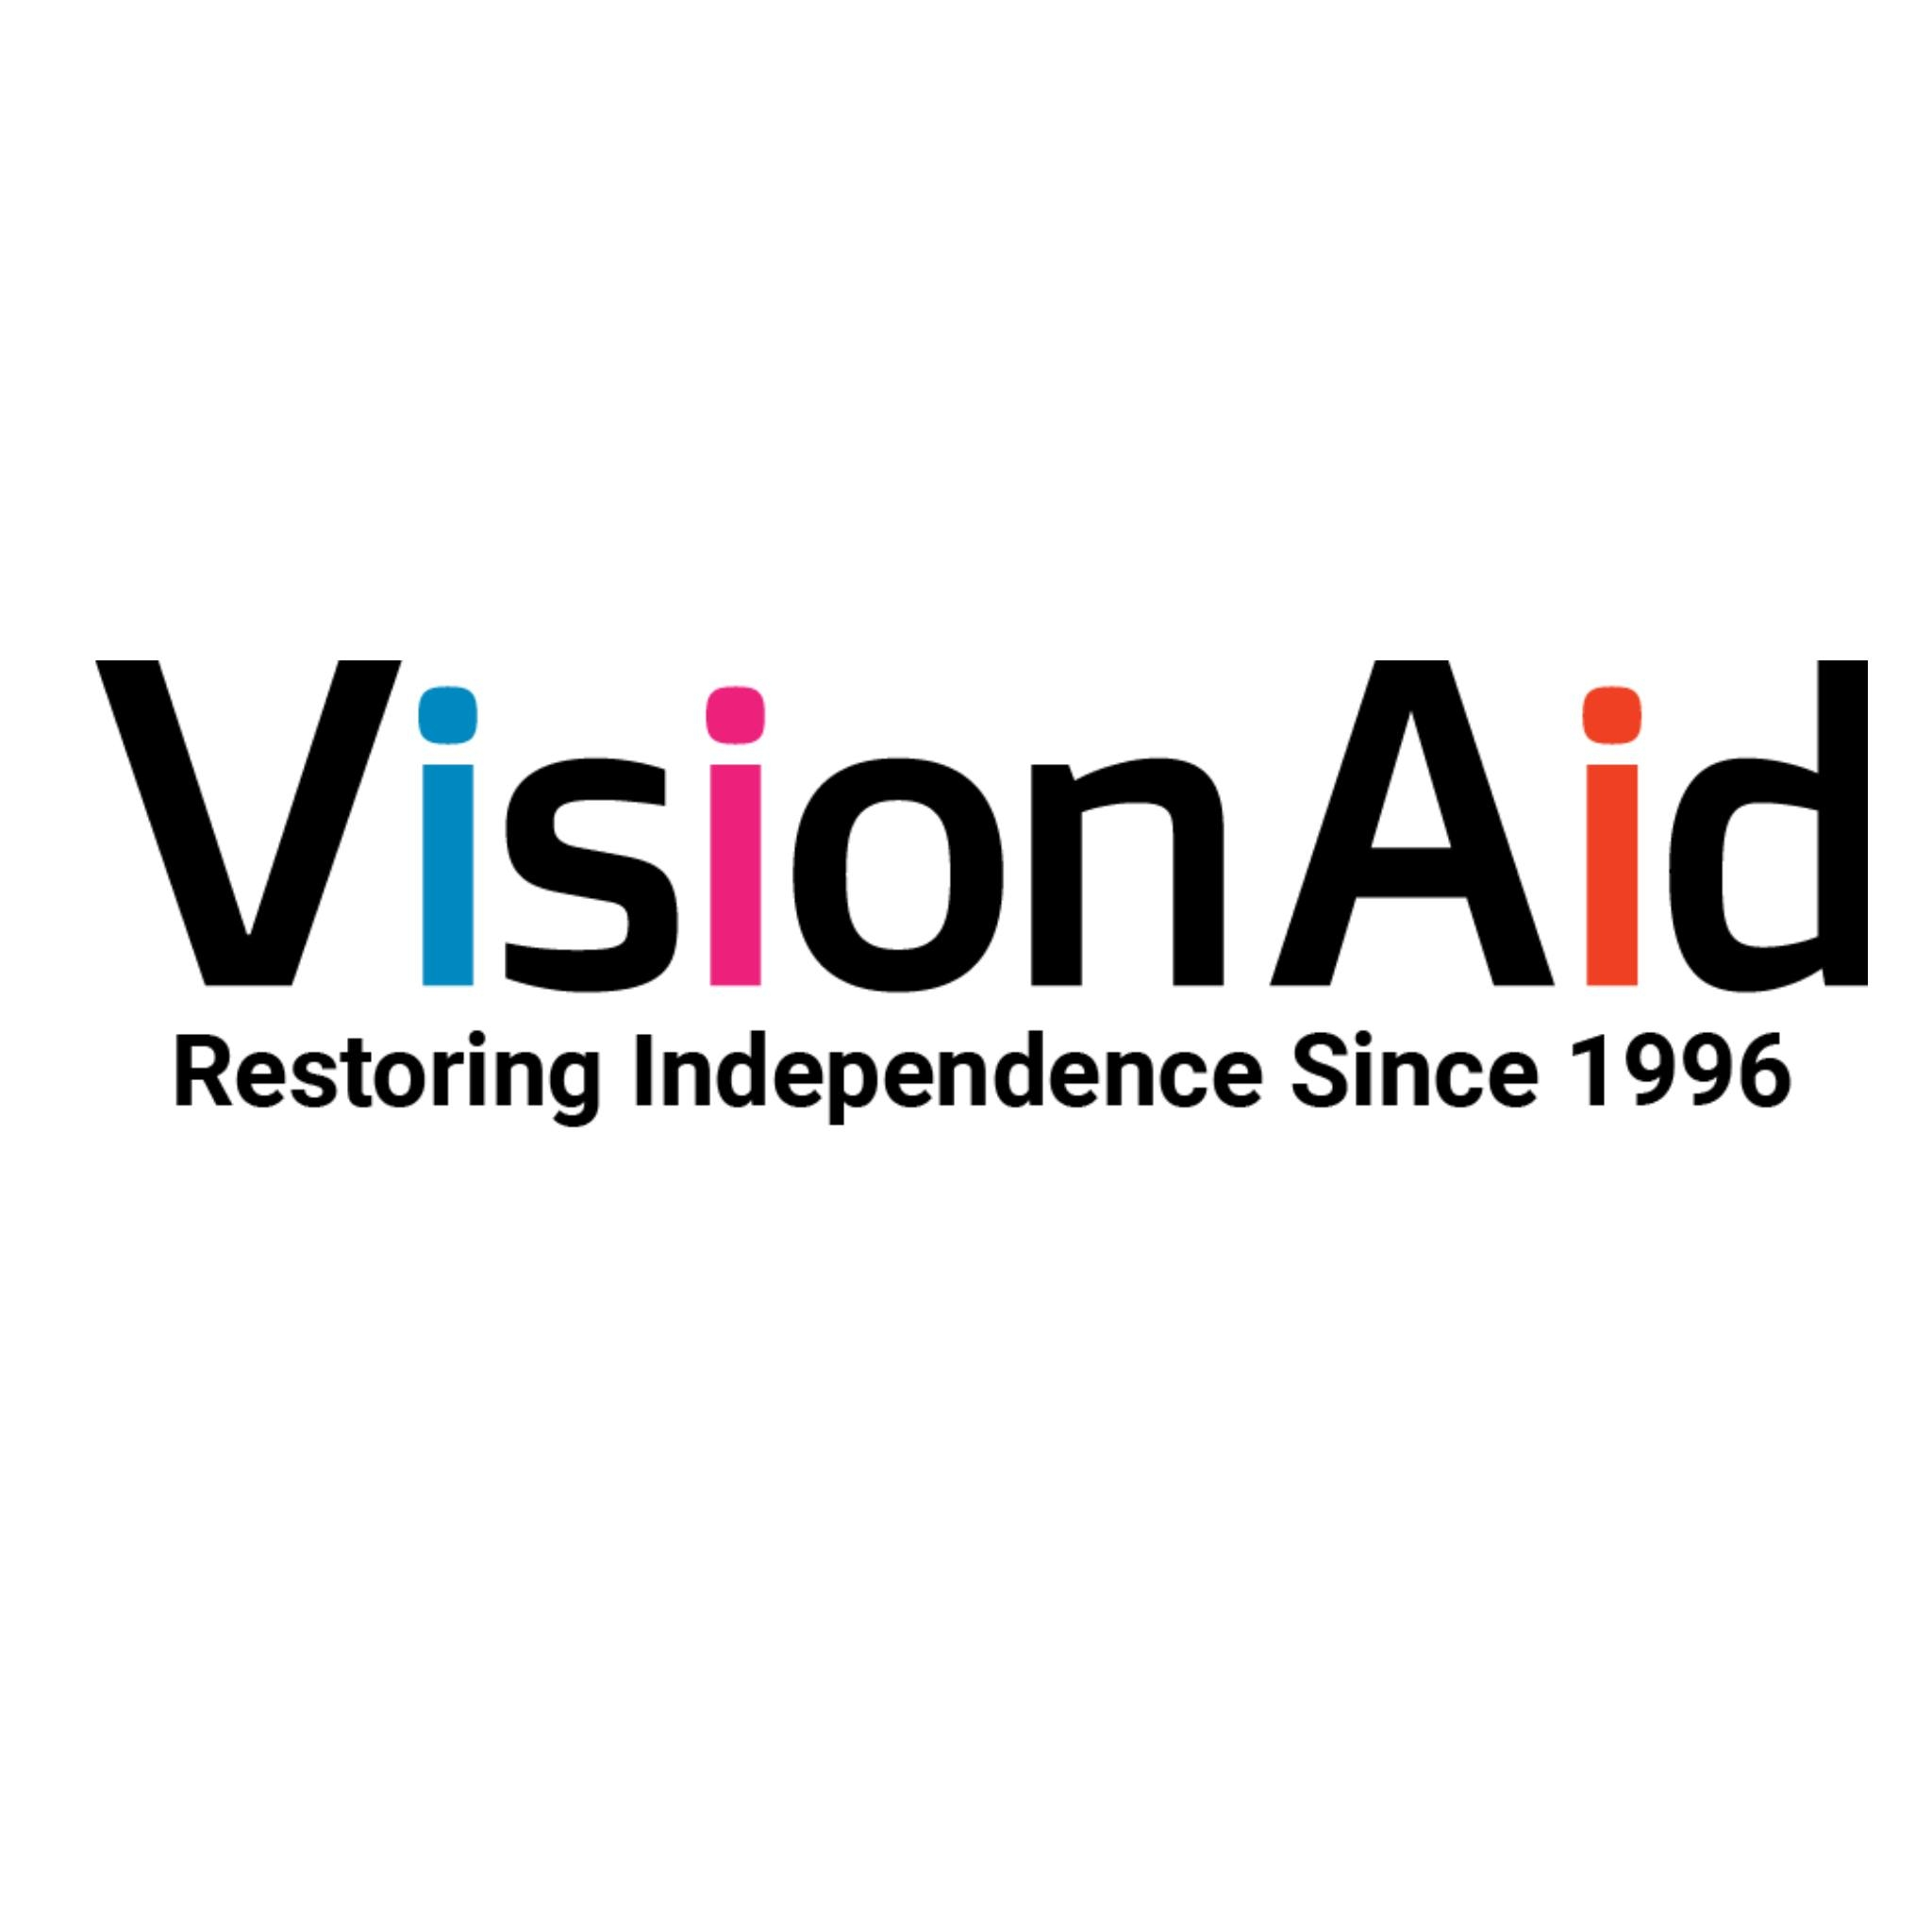 VisionAid - Restoring Independence Since 1996